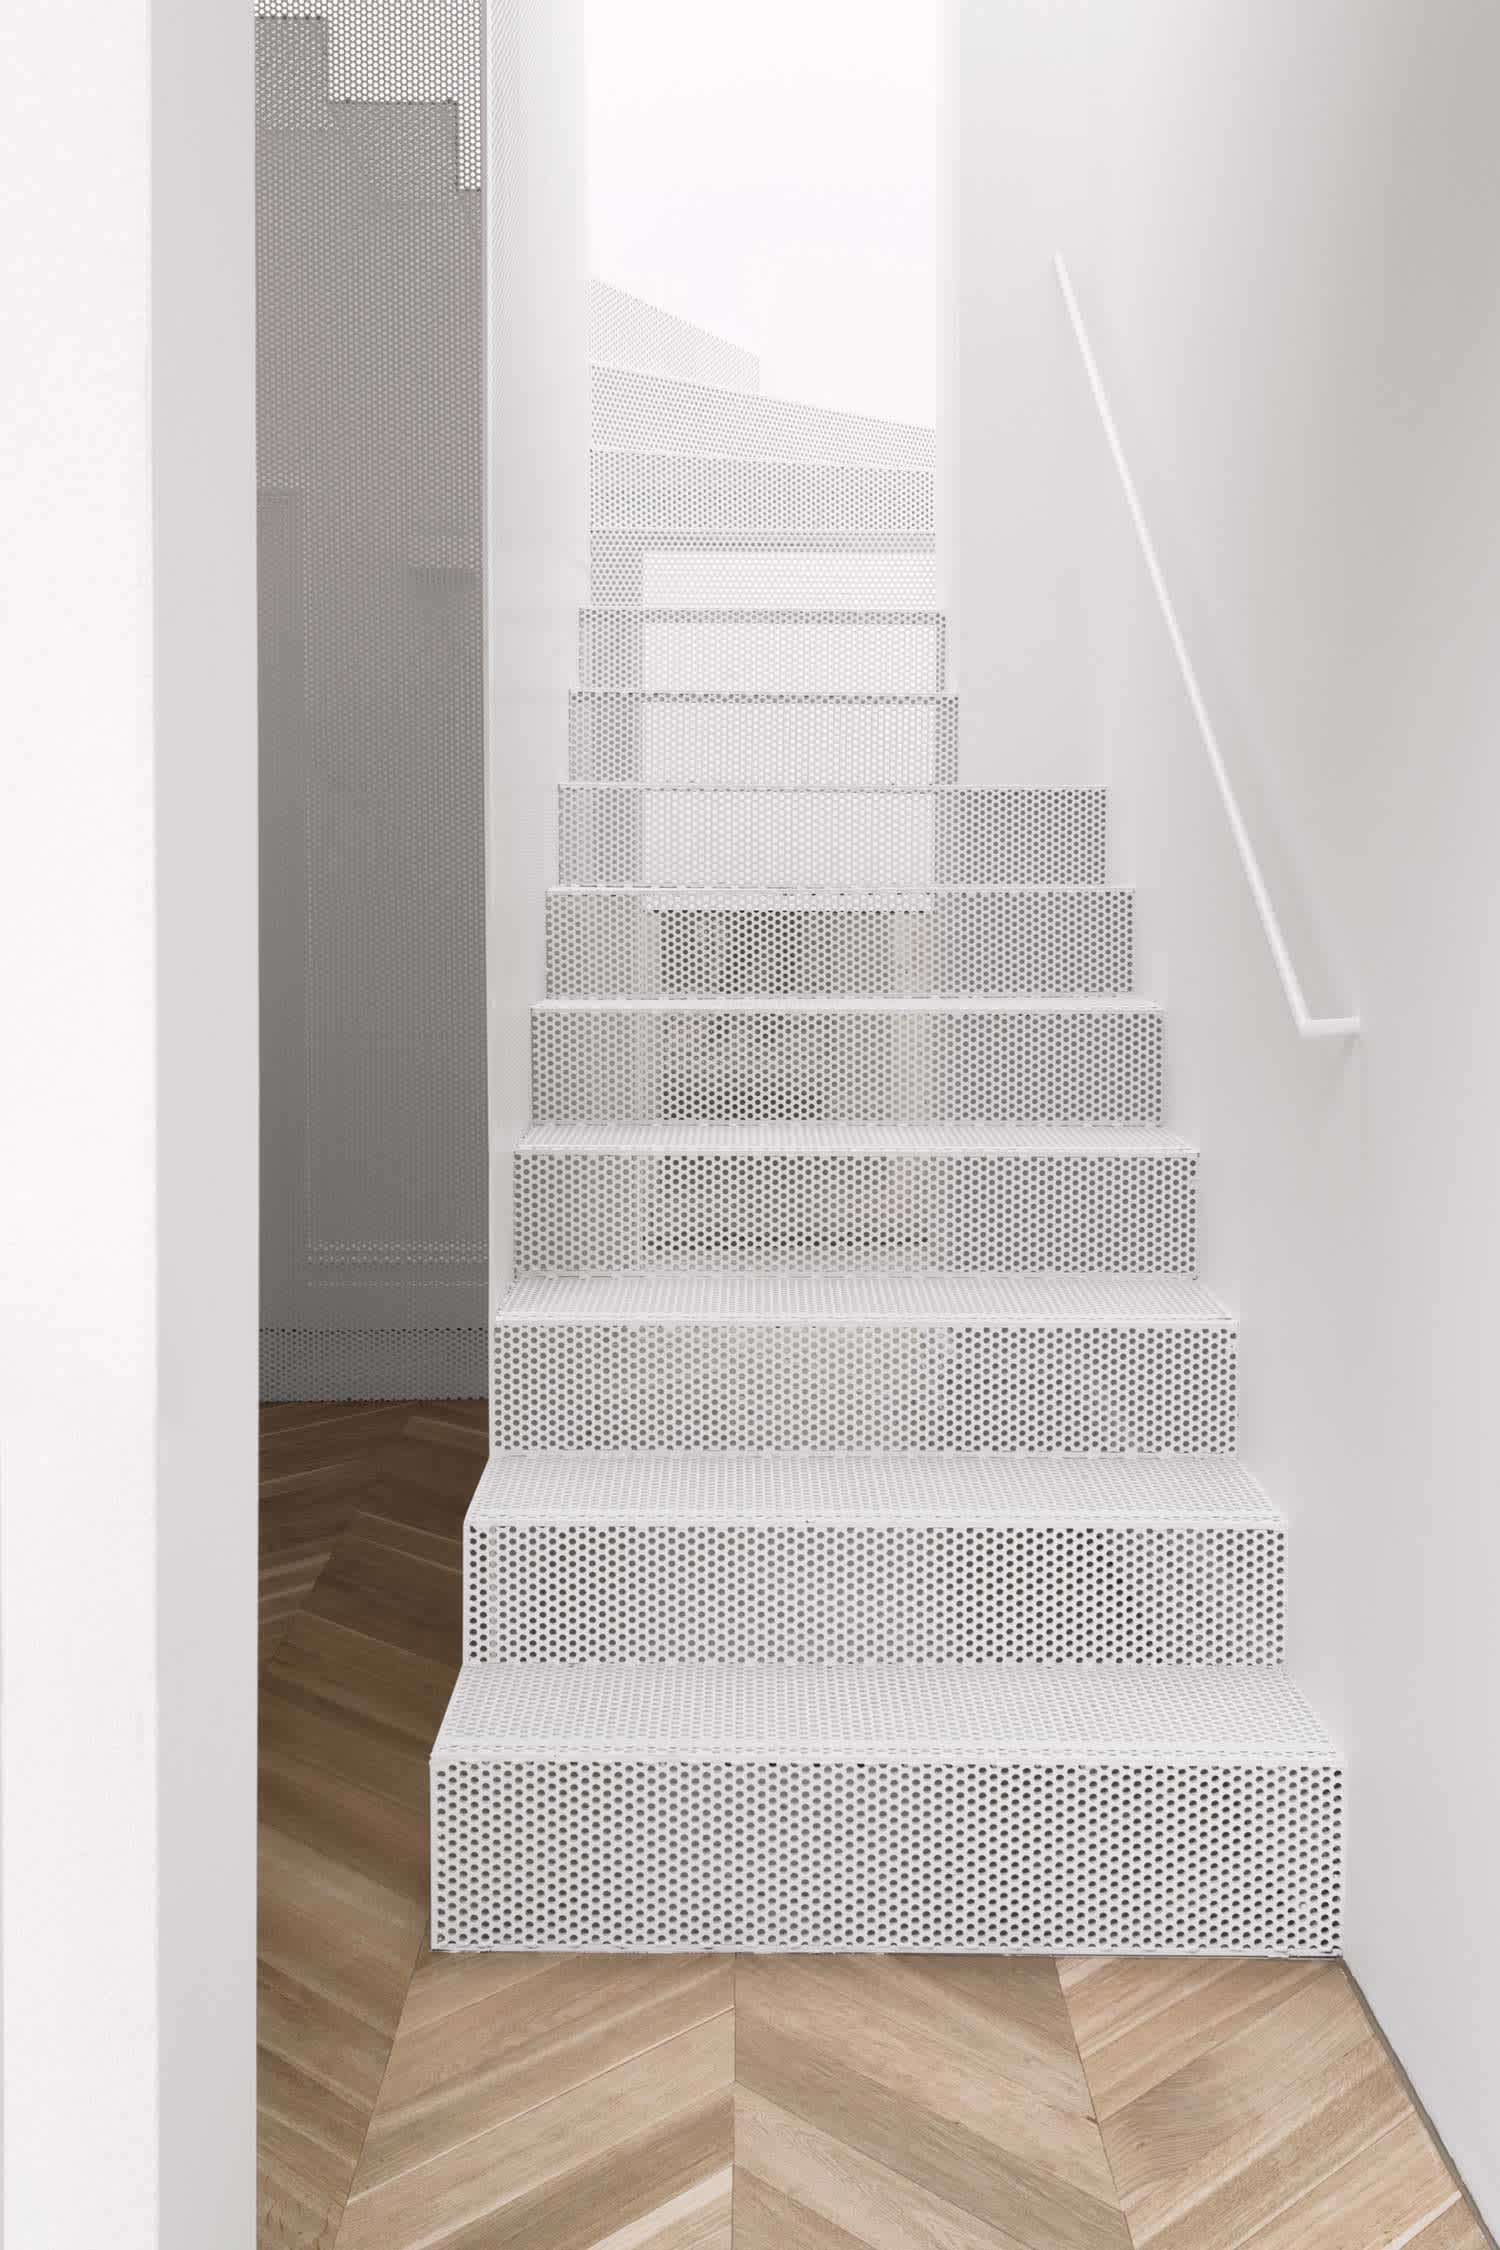 stairs-italianate-house